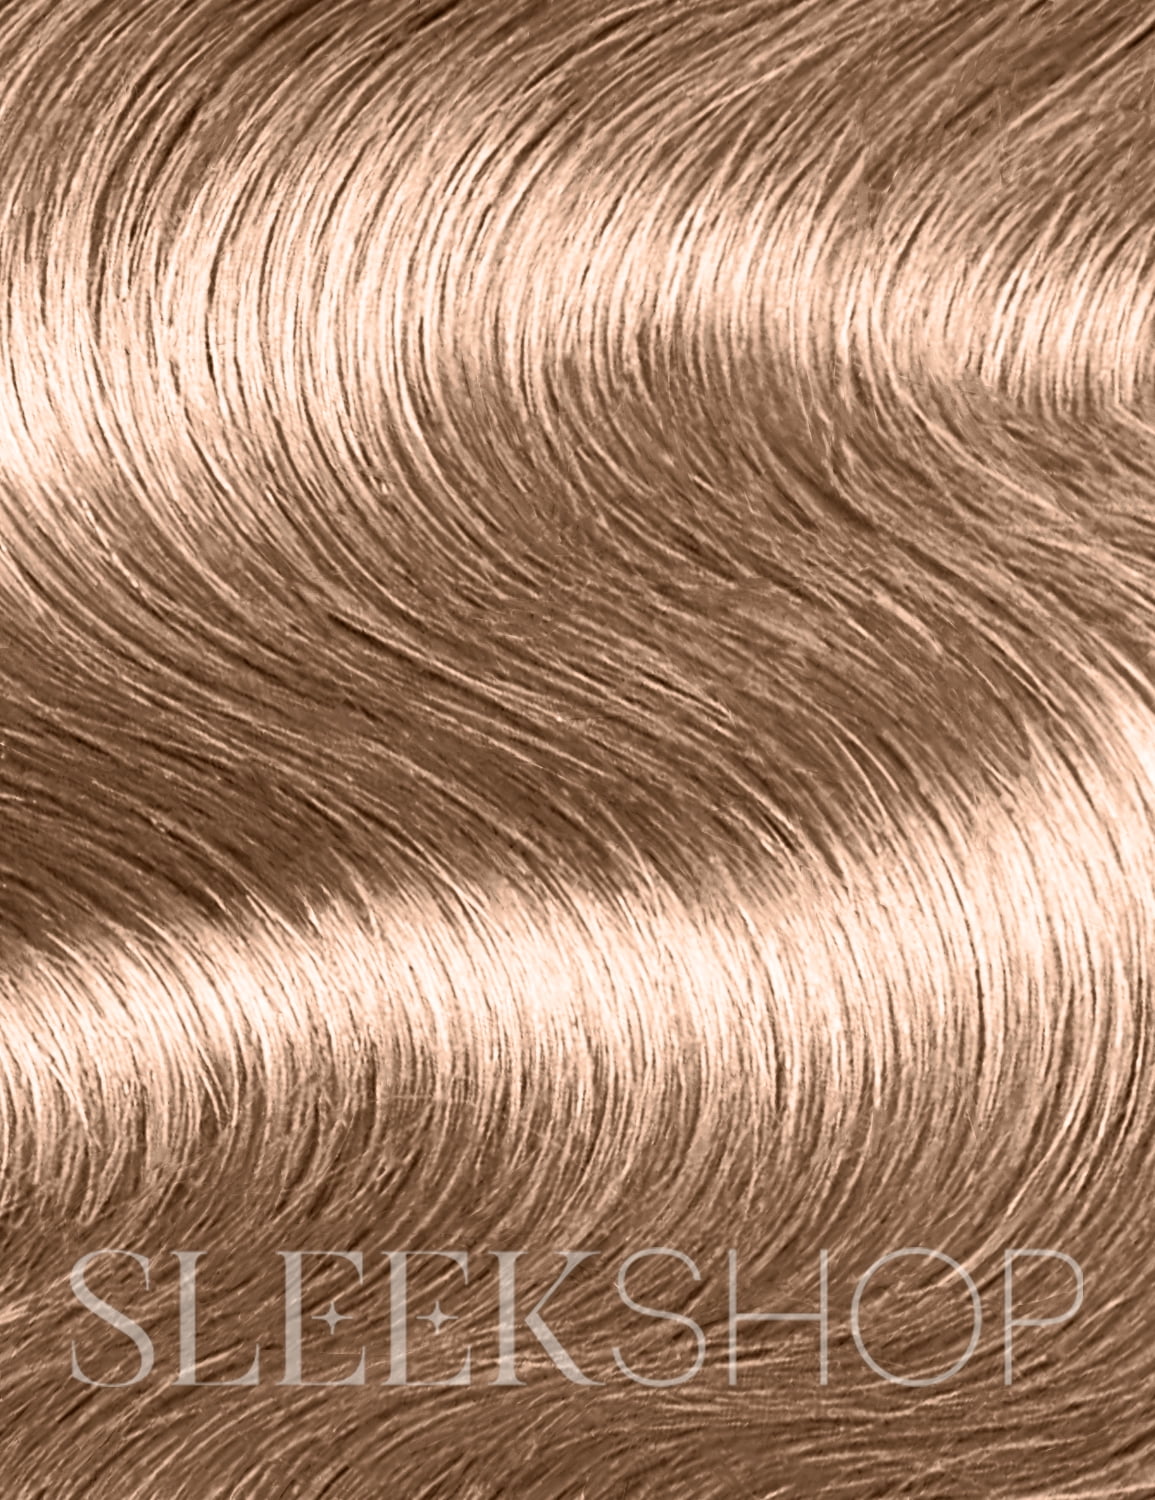  Schwarzkopf Igora Royal 8-77 - Light Blonde Copper Extra Hair  Colour / Tint 60ml Tube by Igora Royal : Beauty & Personal Care